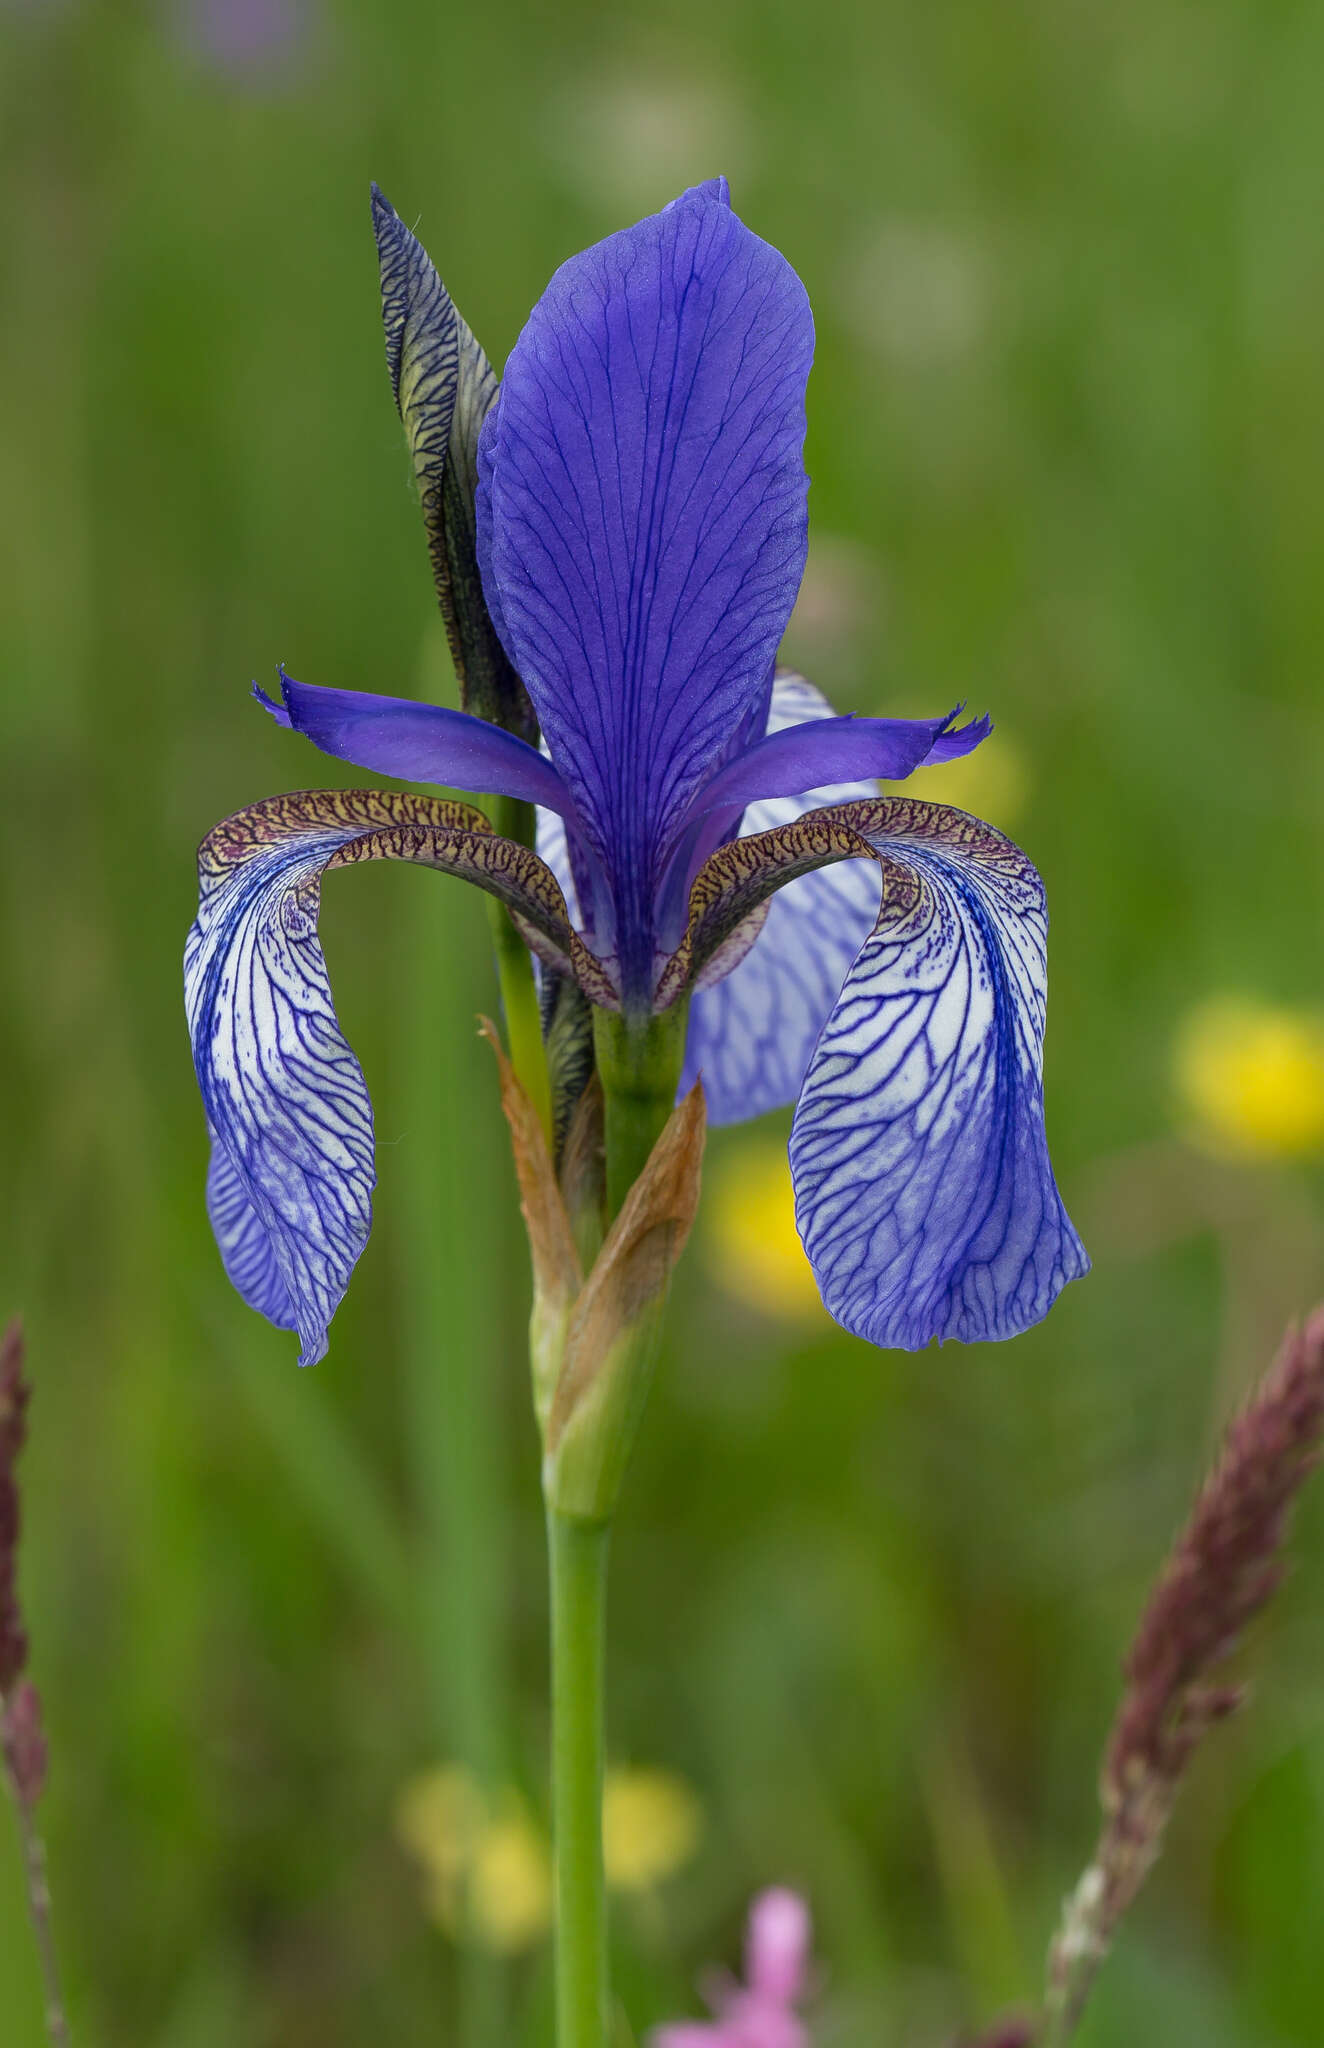 Image of German Iris